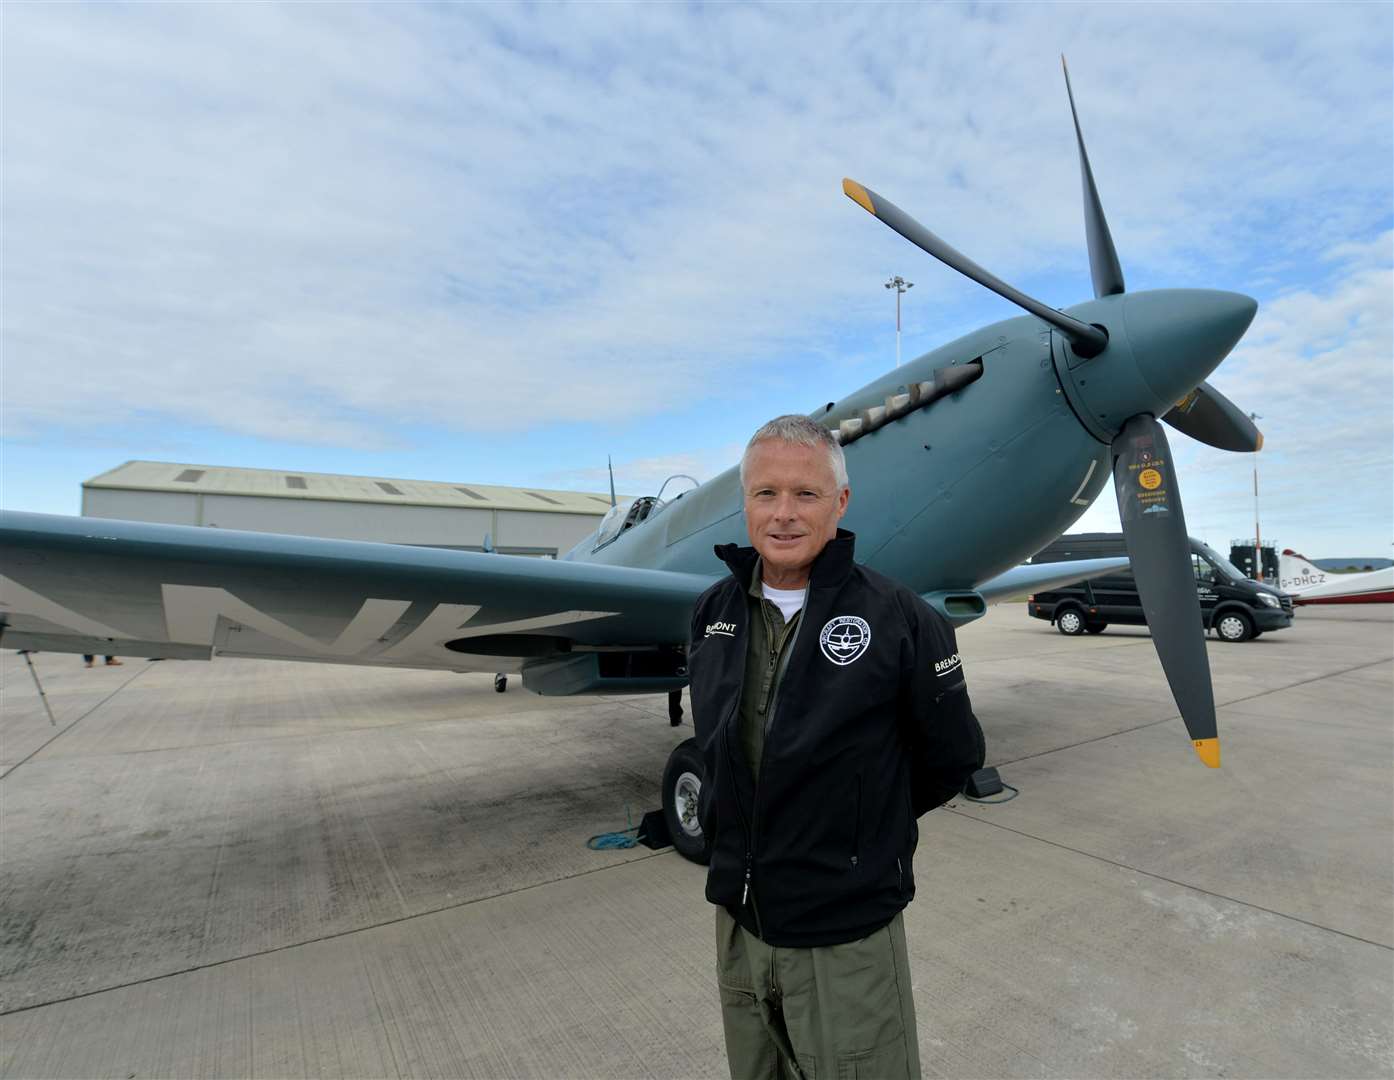 Spitfire pilot John Romain at Inverness Airport.